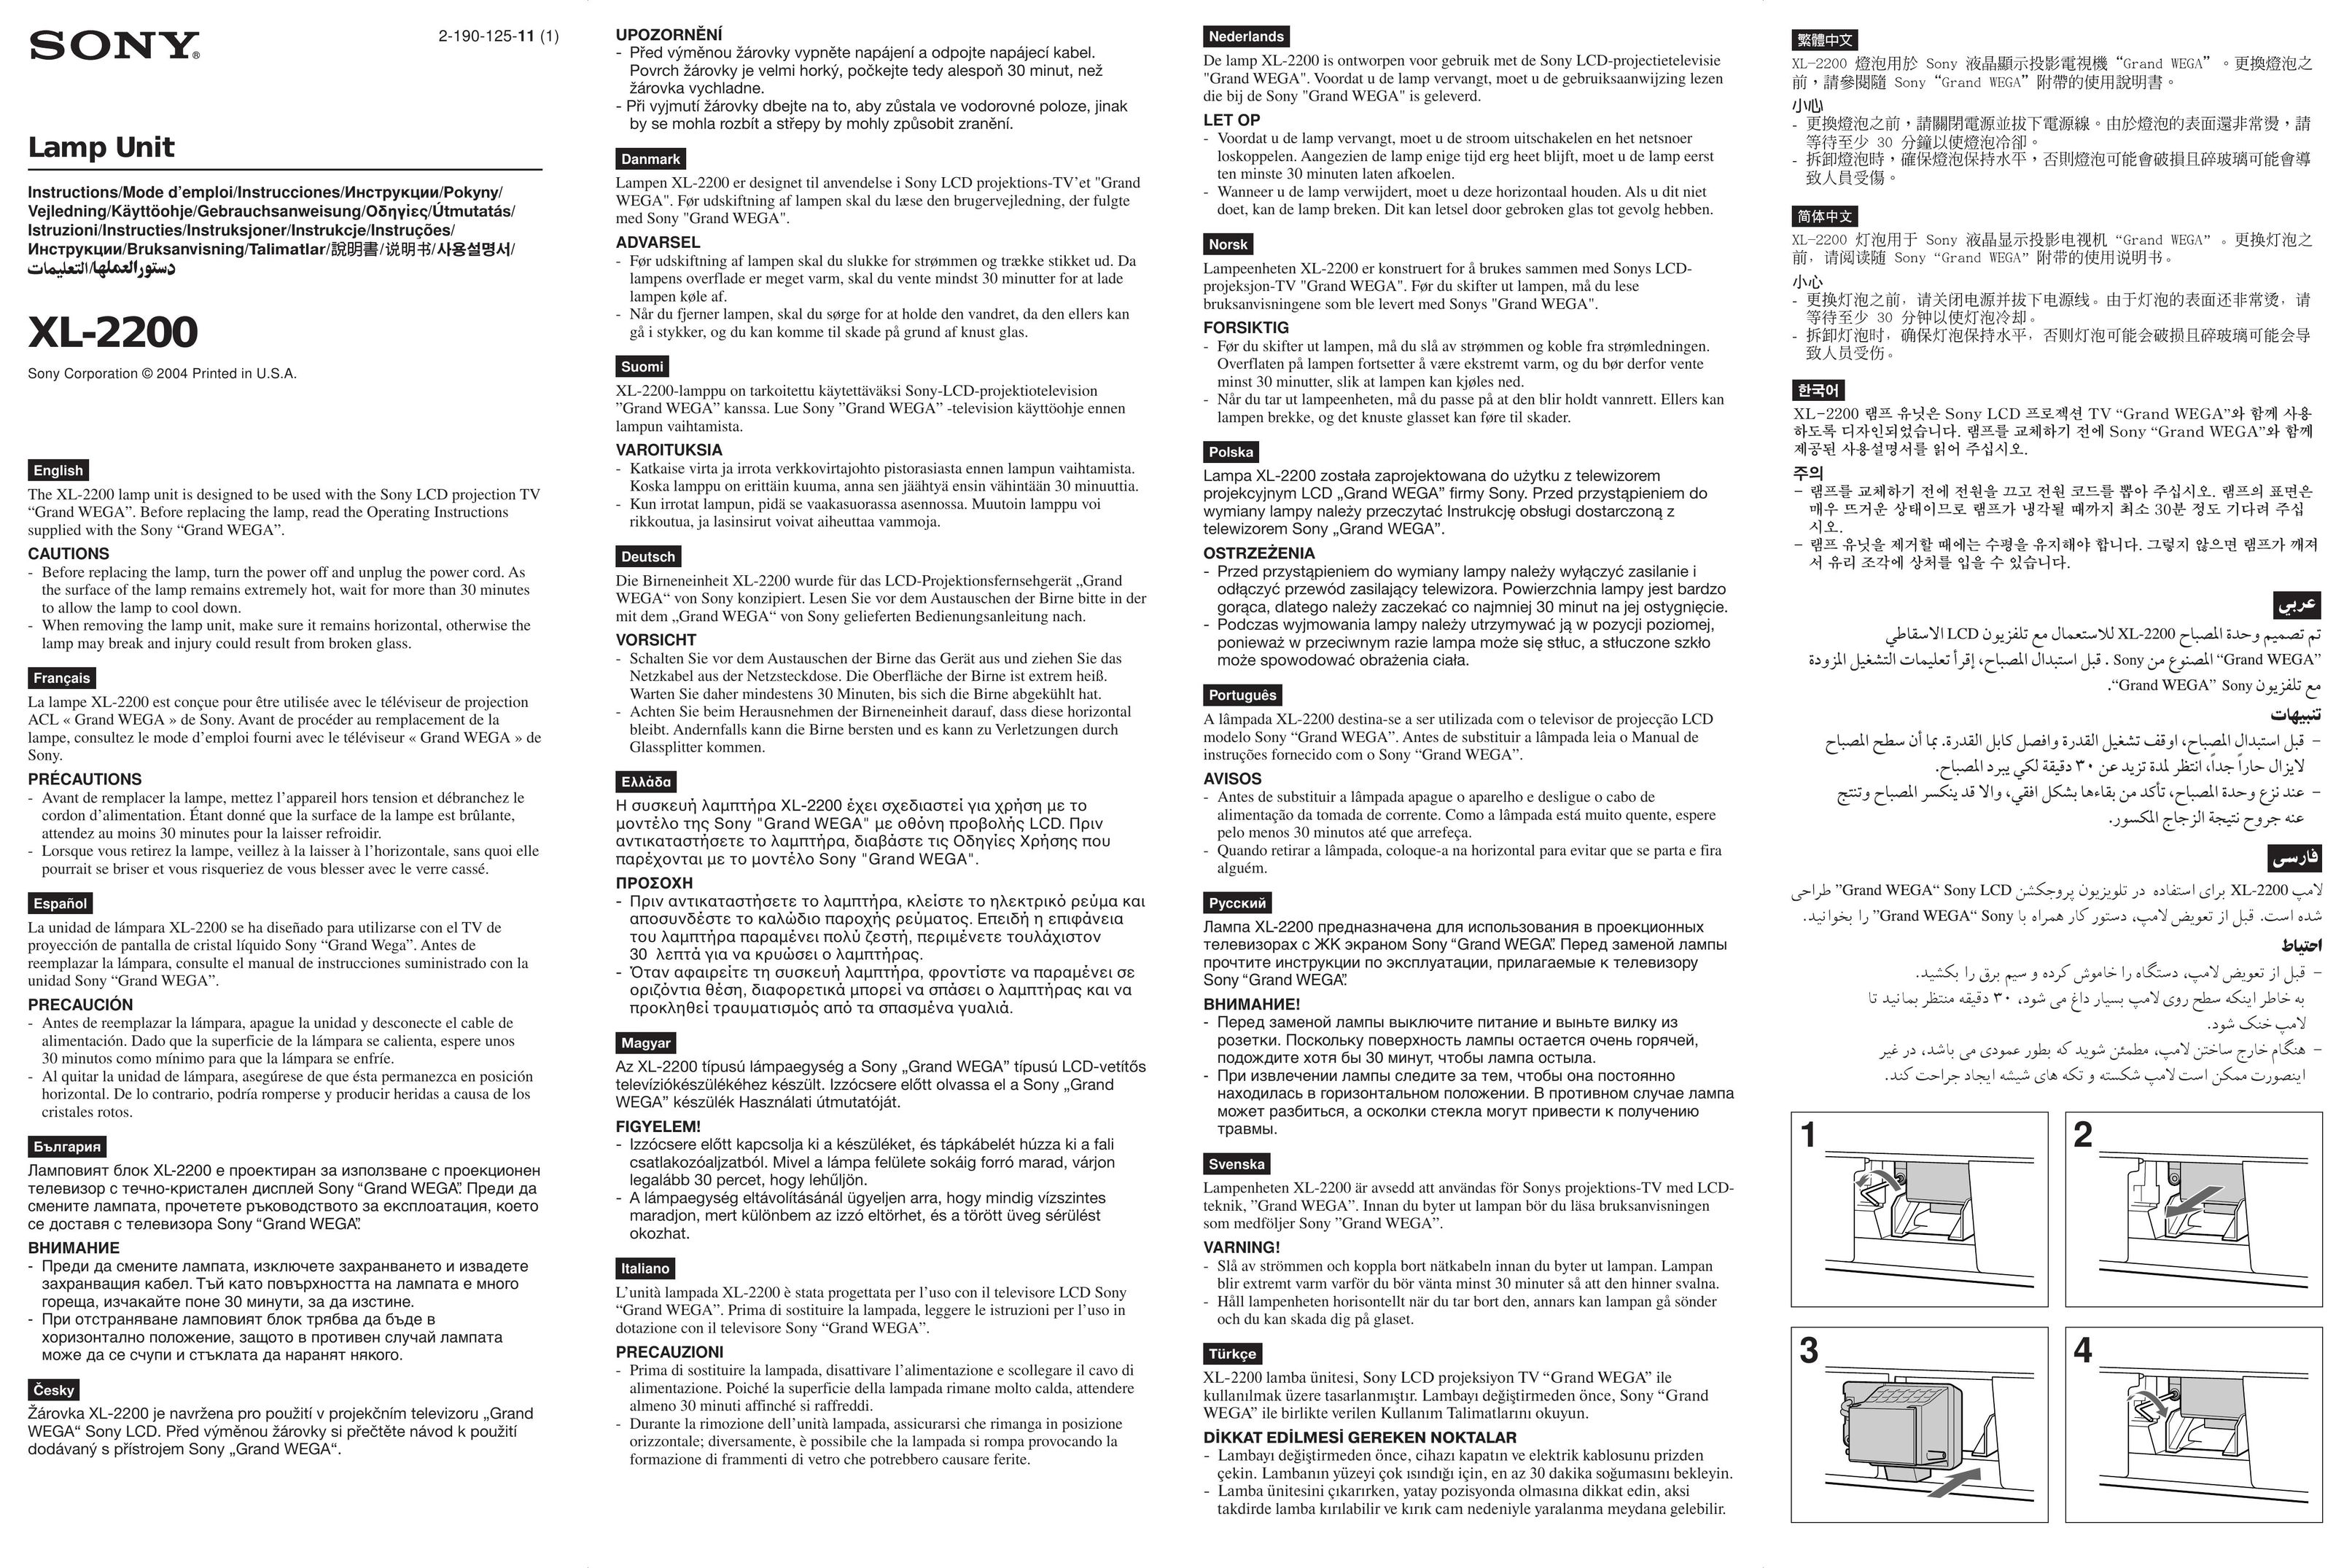 Sony XL-2200 Pet Fence User Manual